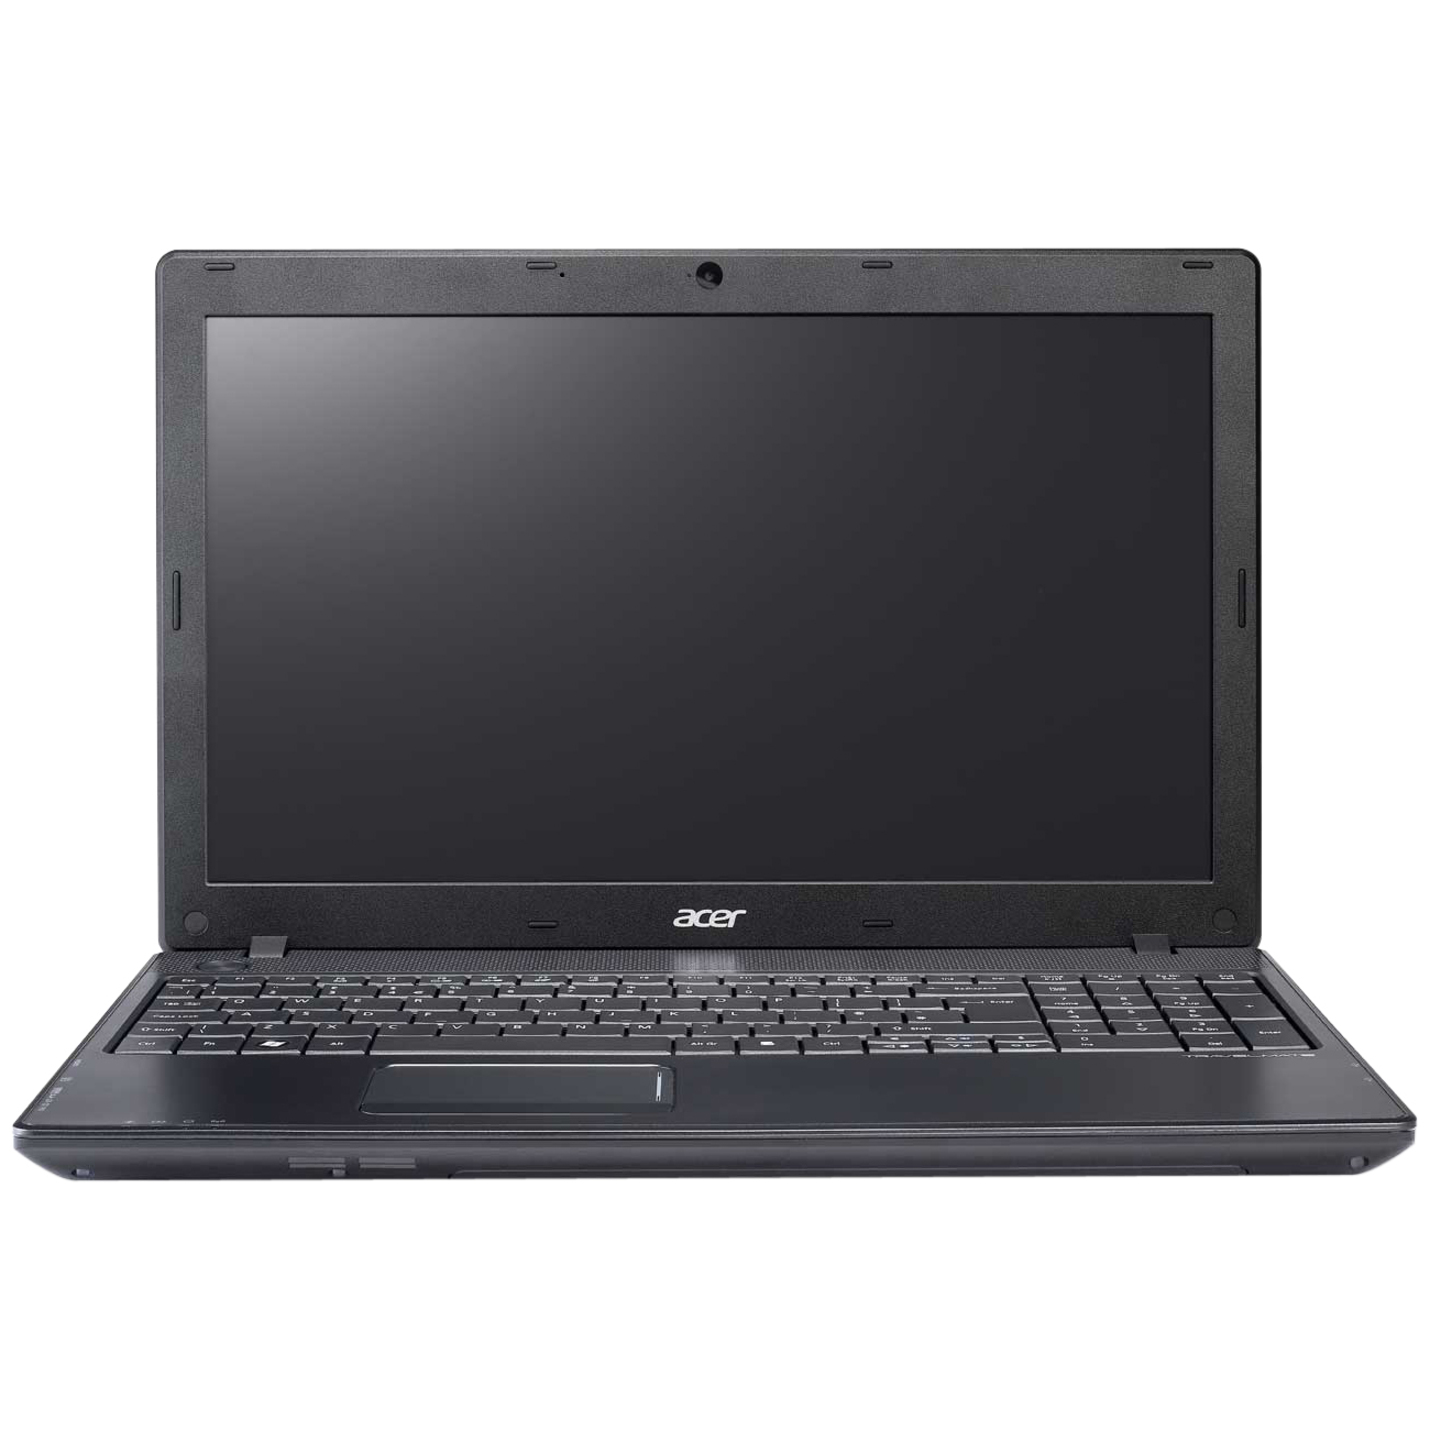 Acer TravelMate 15.6" Laptop, Intel Core i5 i5-3210M, 500GB HD, DVD Writer, Windows 7 Professional, TMP453-M-53214G50Mikk - image 4 of 5